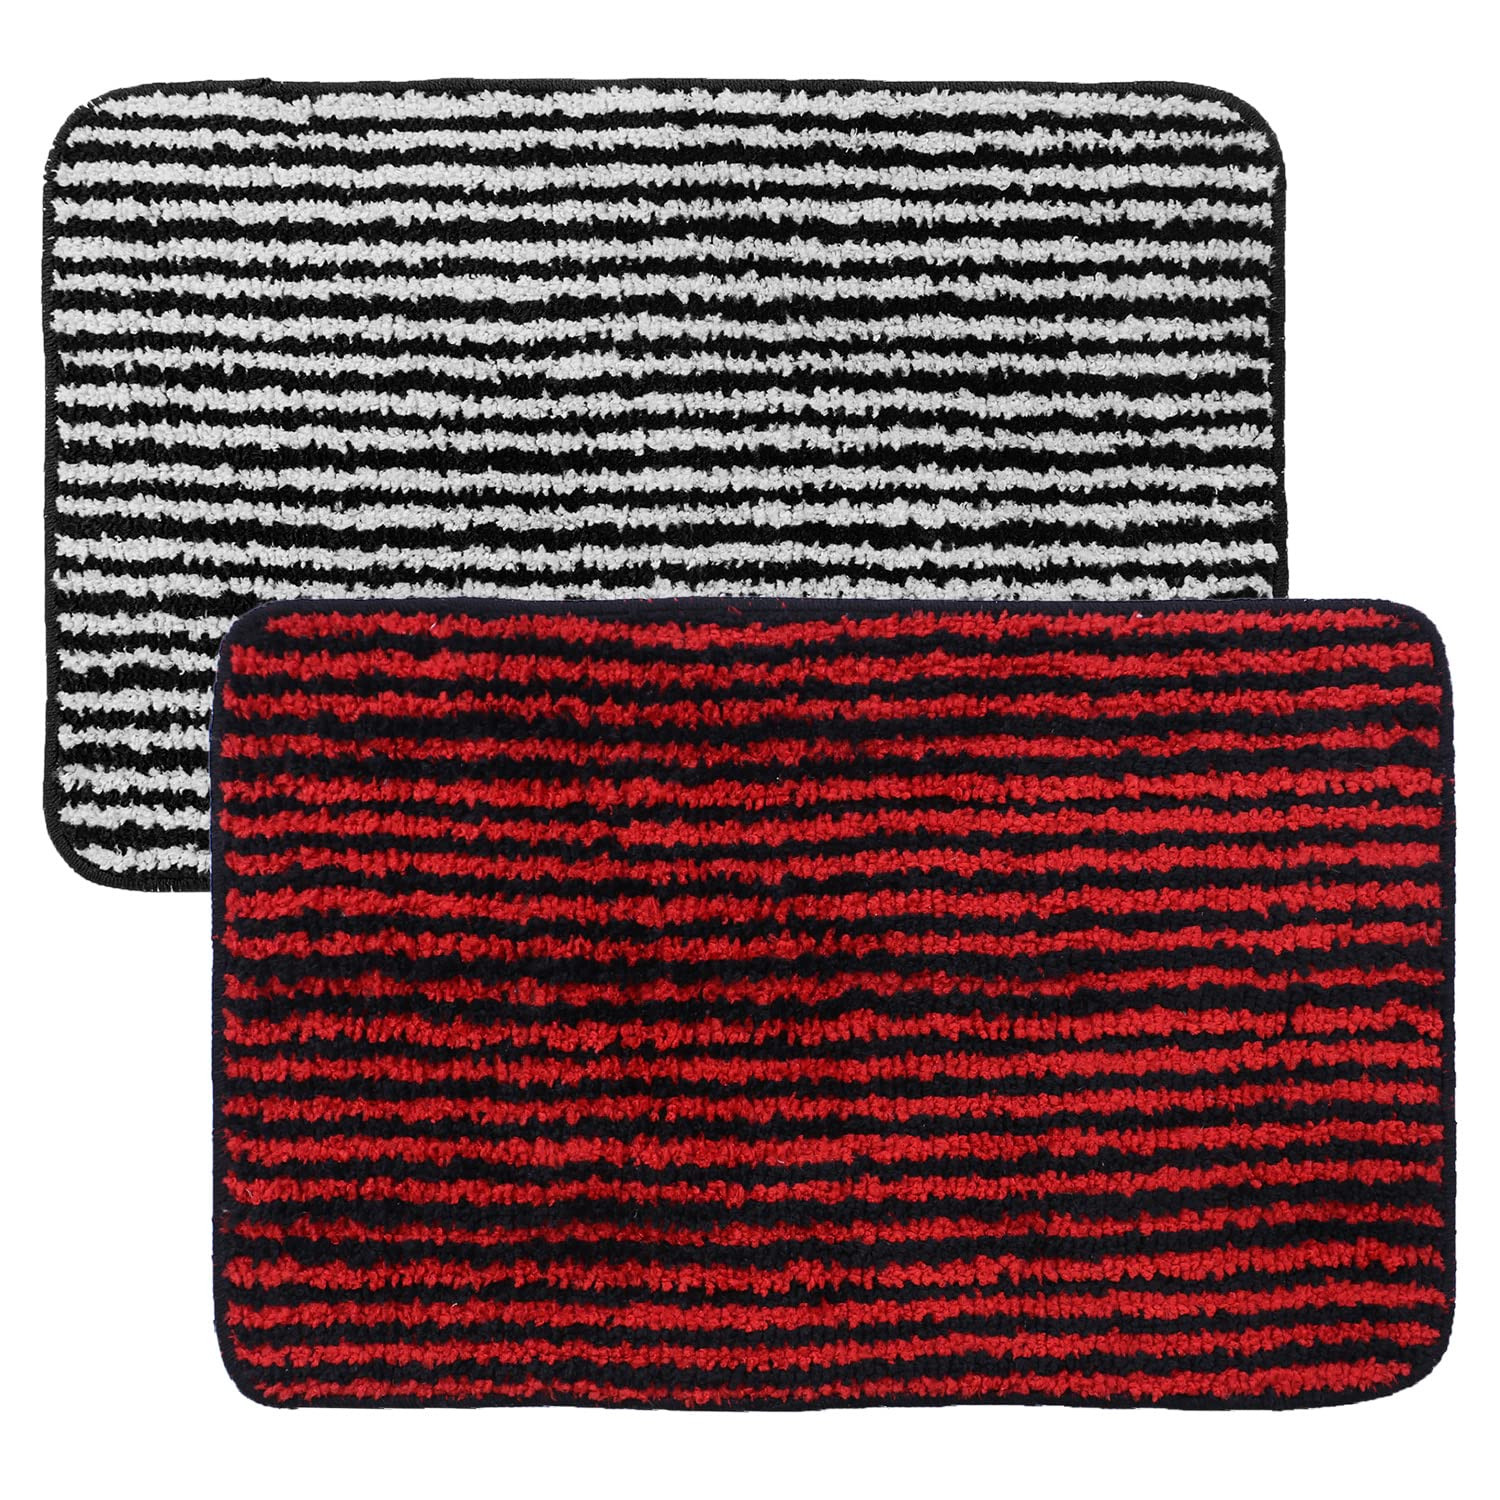 Kuber Industries Door mat|Microfiber Slip-Resistant Water Absorbant Floor Mat|Stripes Pattern Entrance Mat for Kitchen,Bedside,Door,Living Room,60x40 cm,Pack of 2 (Black & Red)